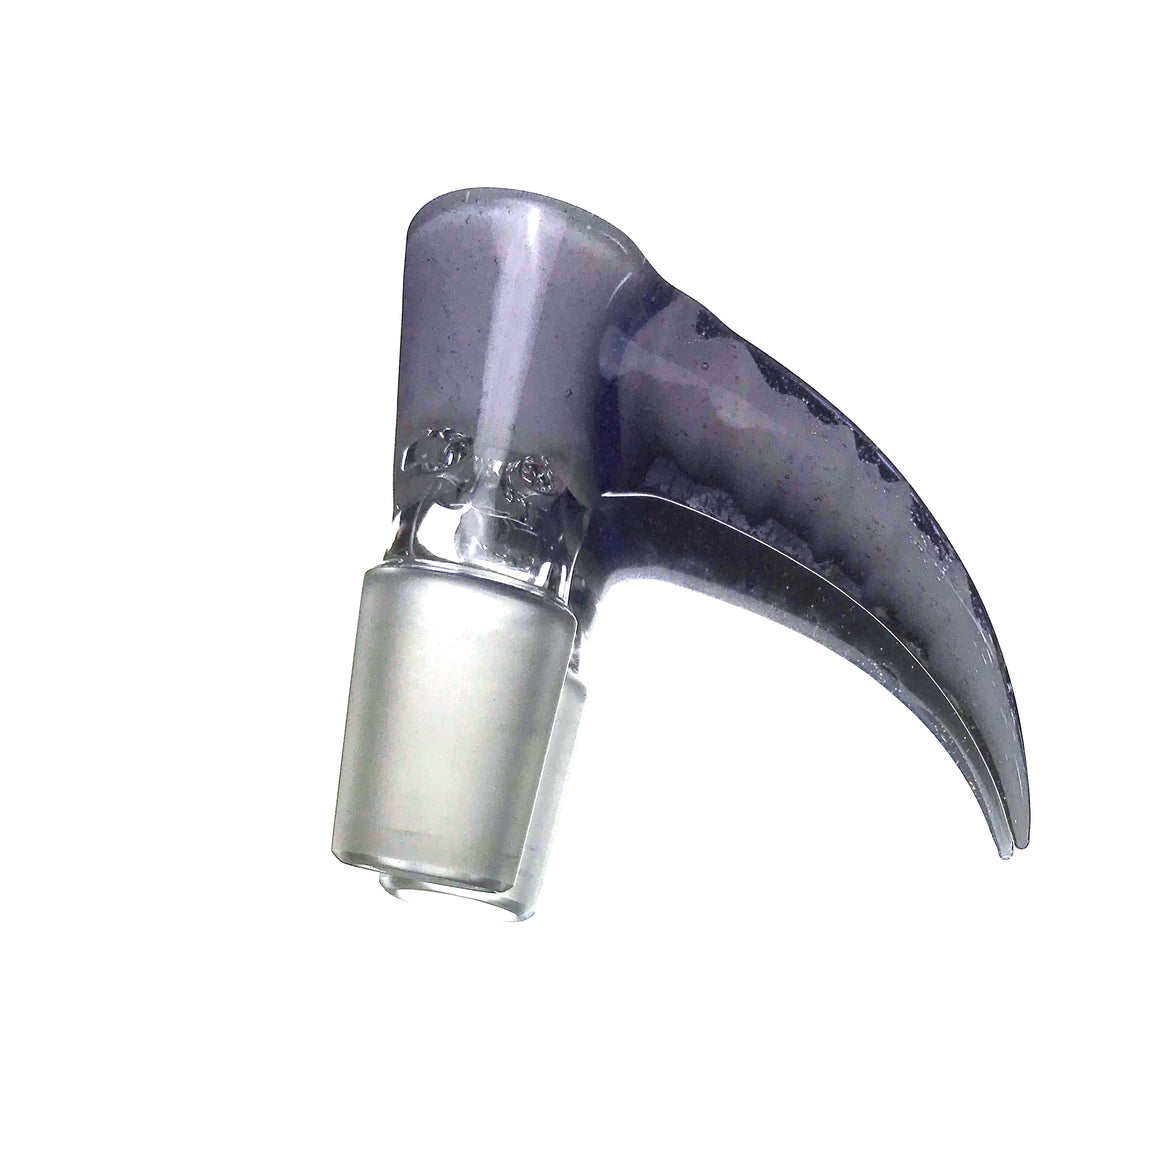 CFL 4-hole Slide - White/Hydra - 18mm Male